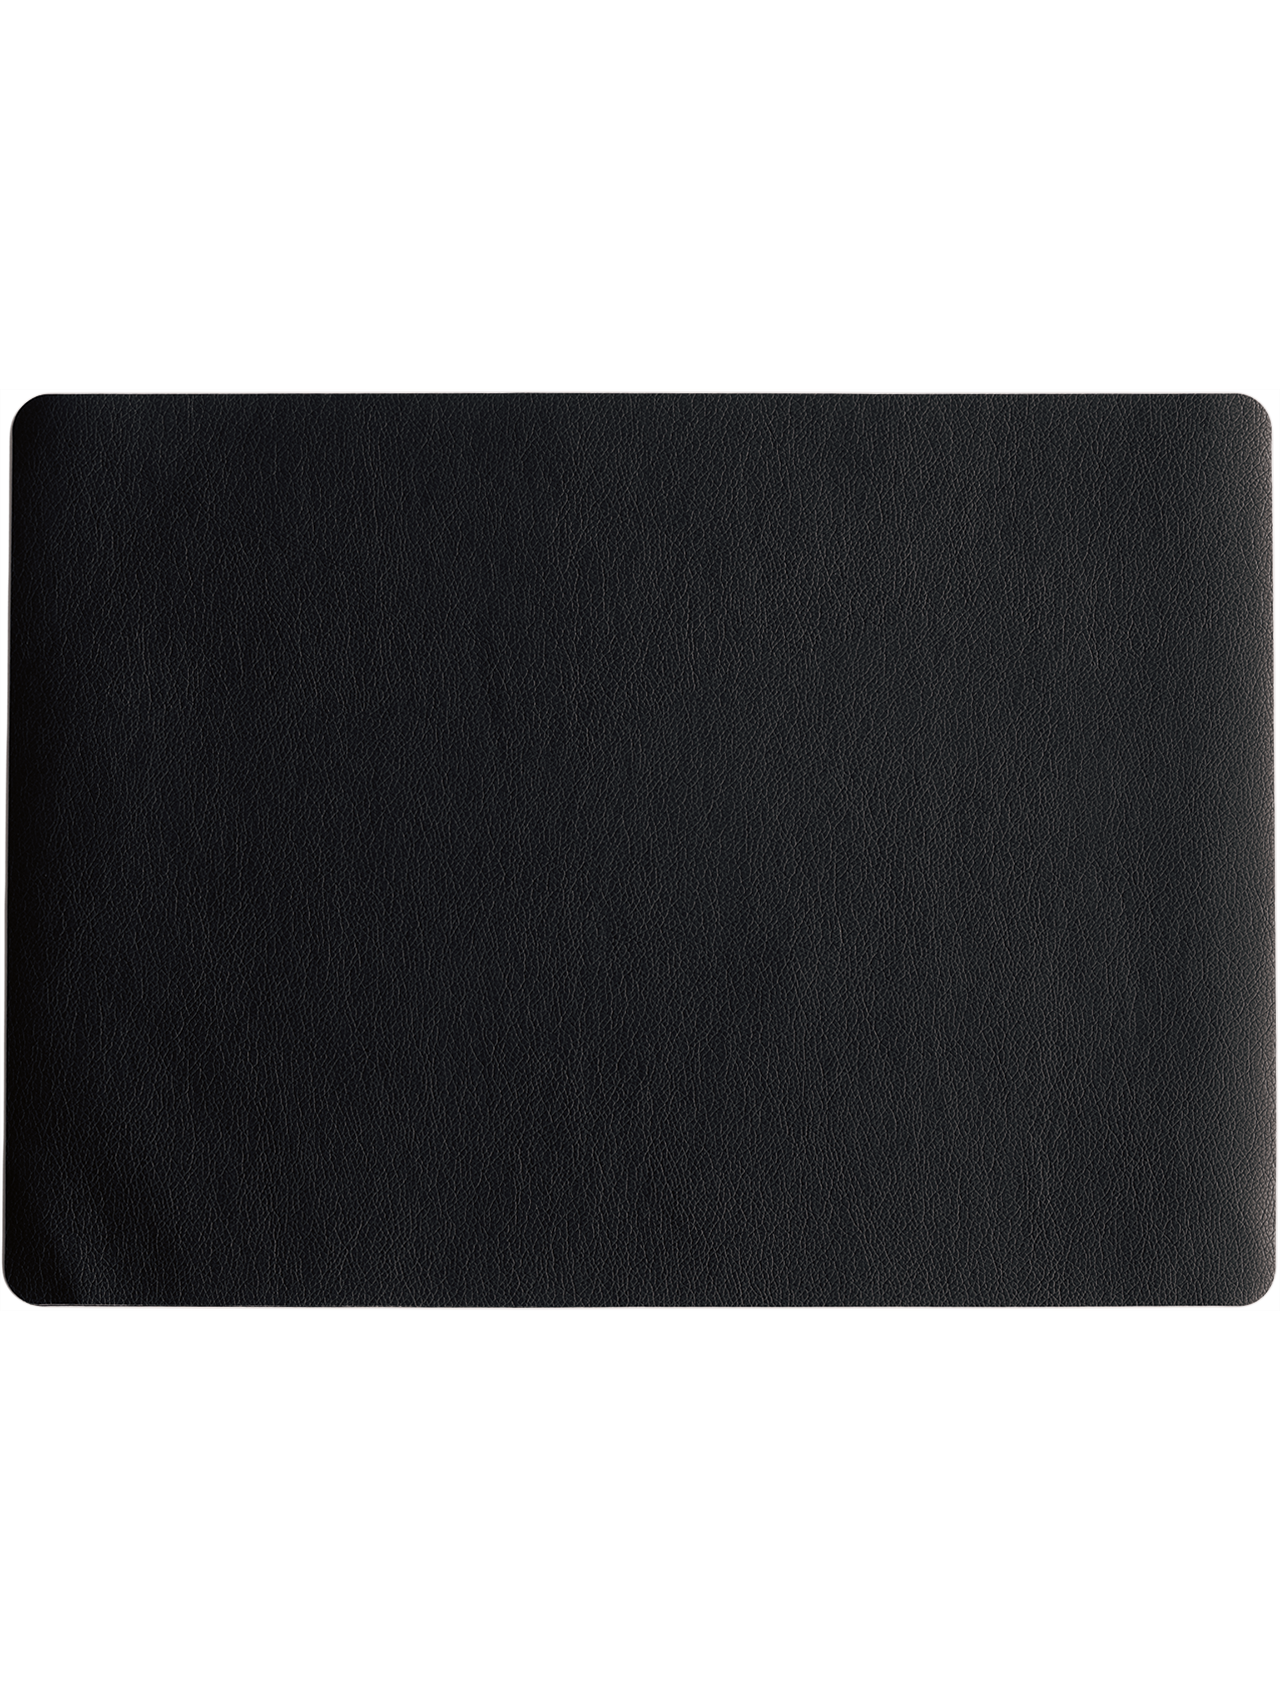 ASA leather optic Tischset eckig schwarz 46 x 33 cm PU